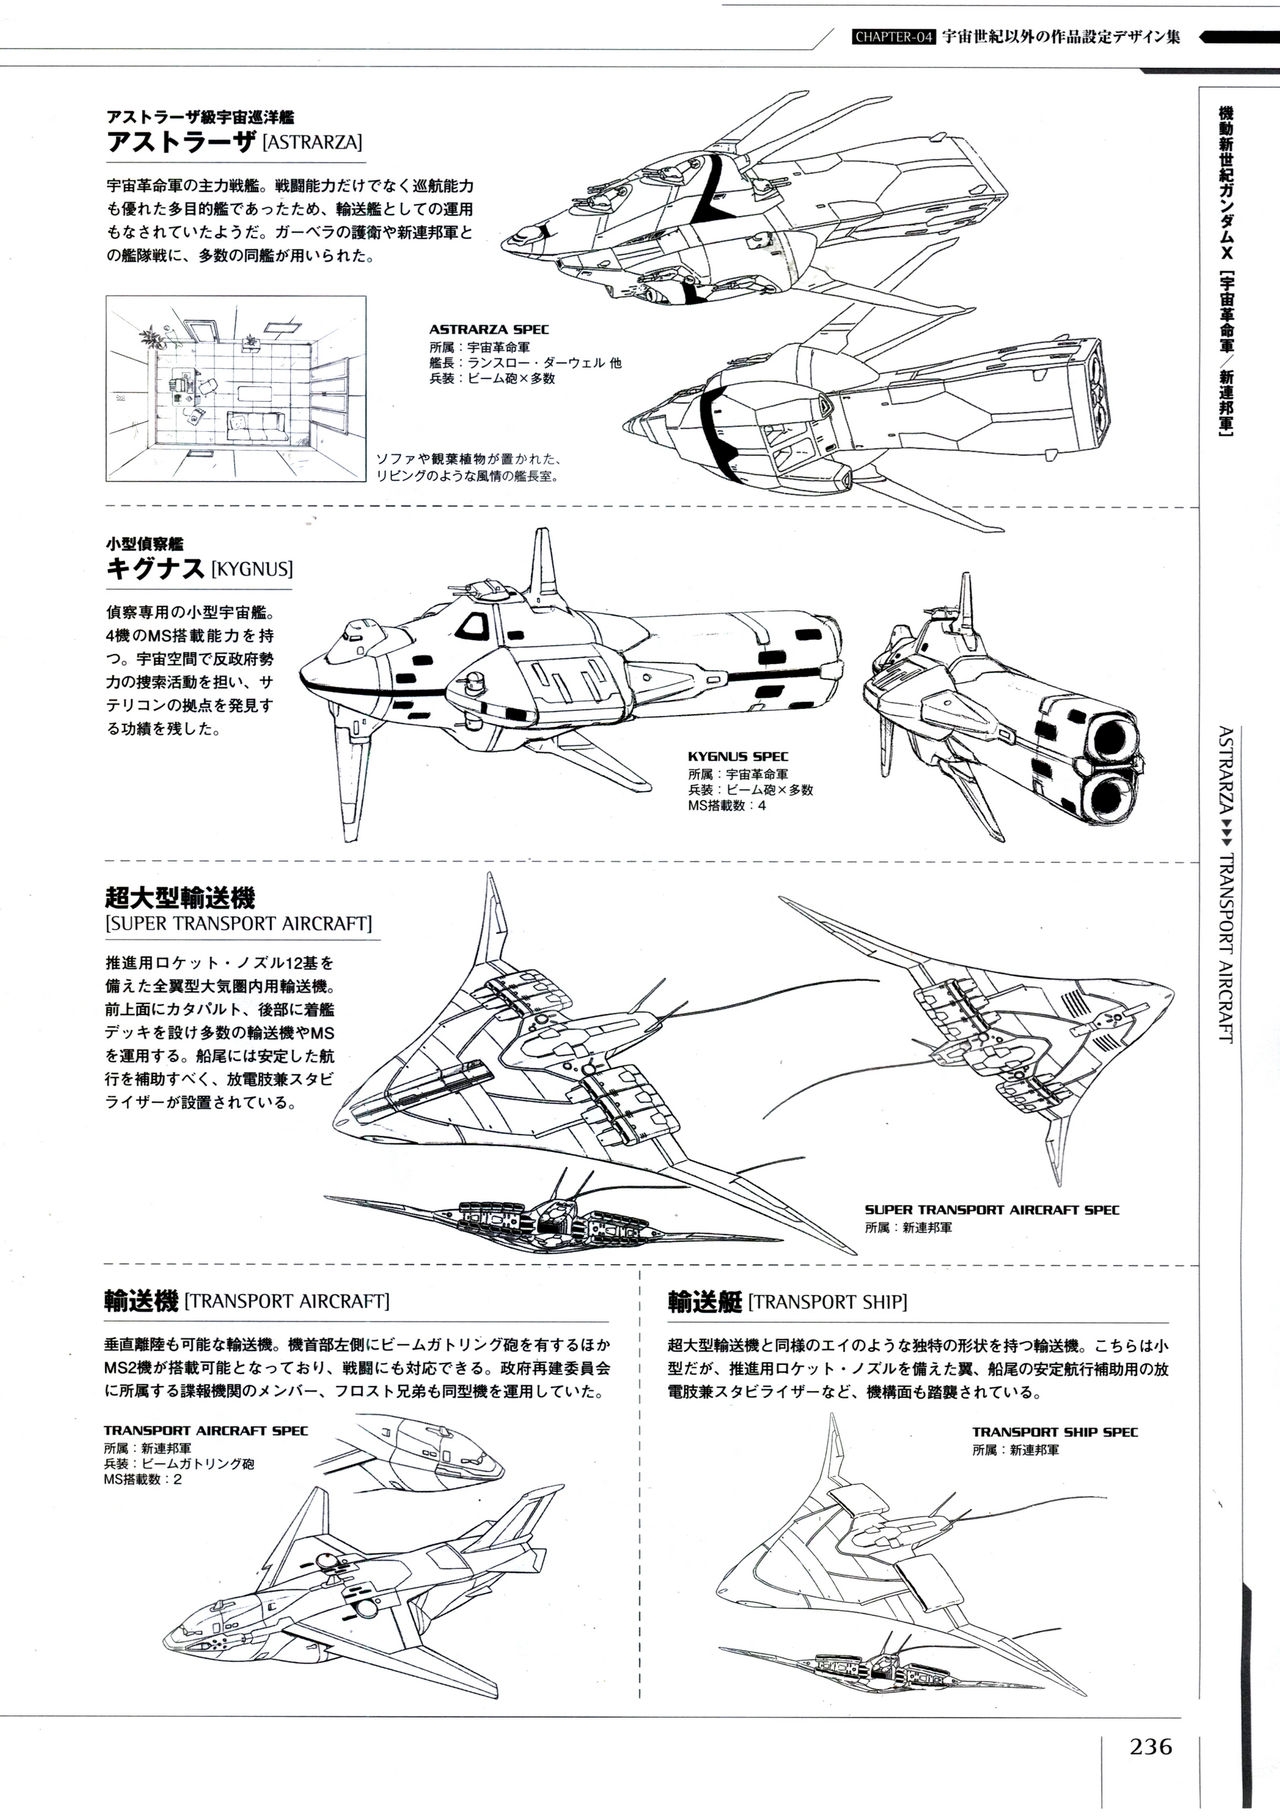 Mobile Suit Gundam - Ship & Aerospace Plane Encyclopedia - Revised Edition 241